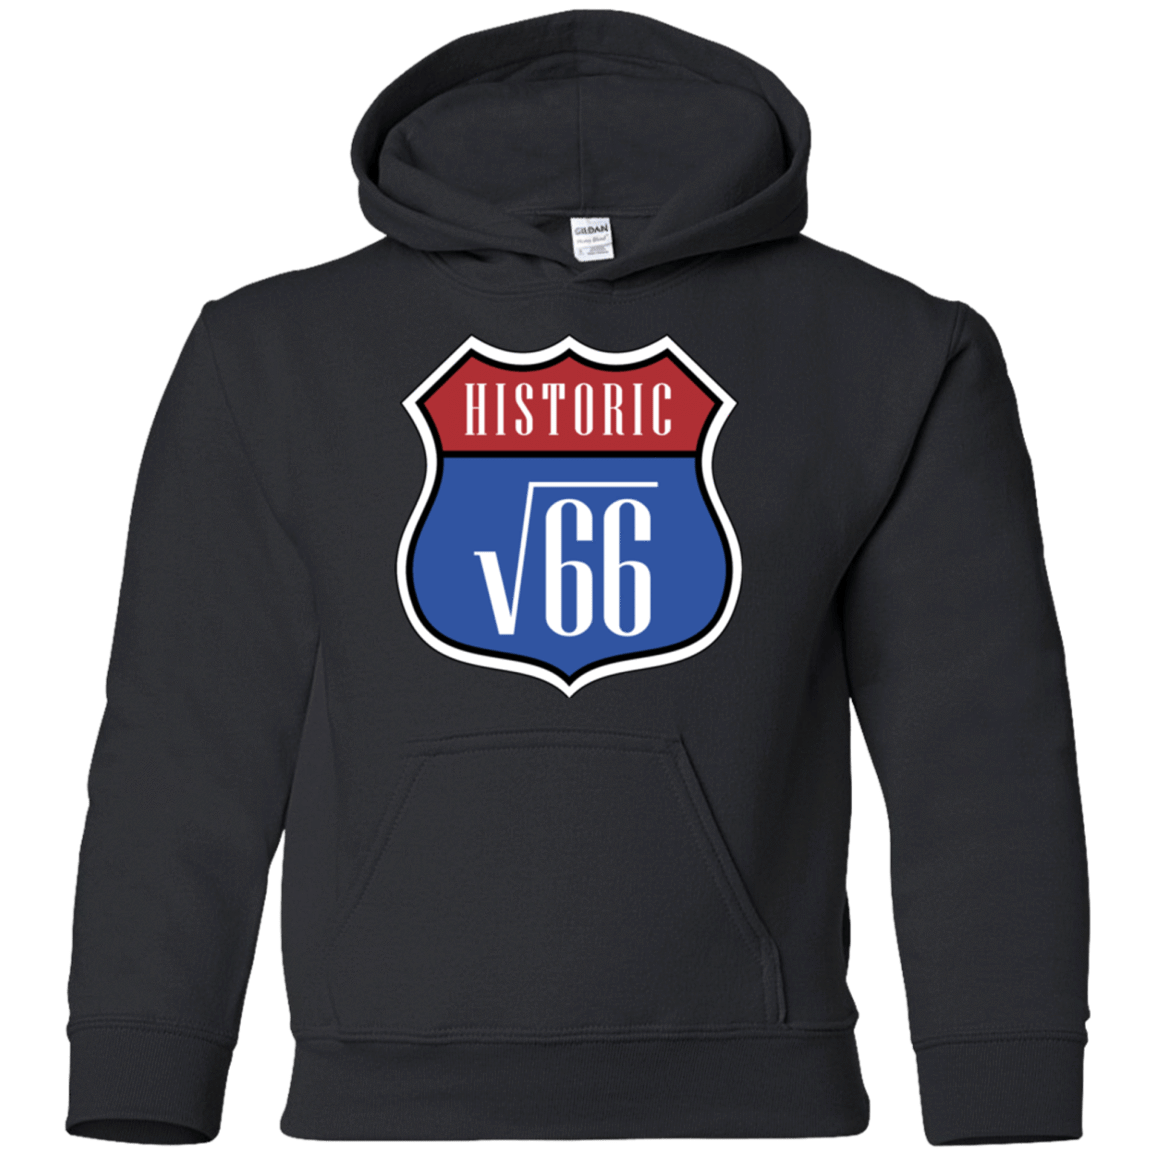 Sweatshirts Black / YS Route v66 Youth Hoodie